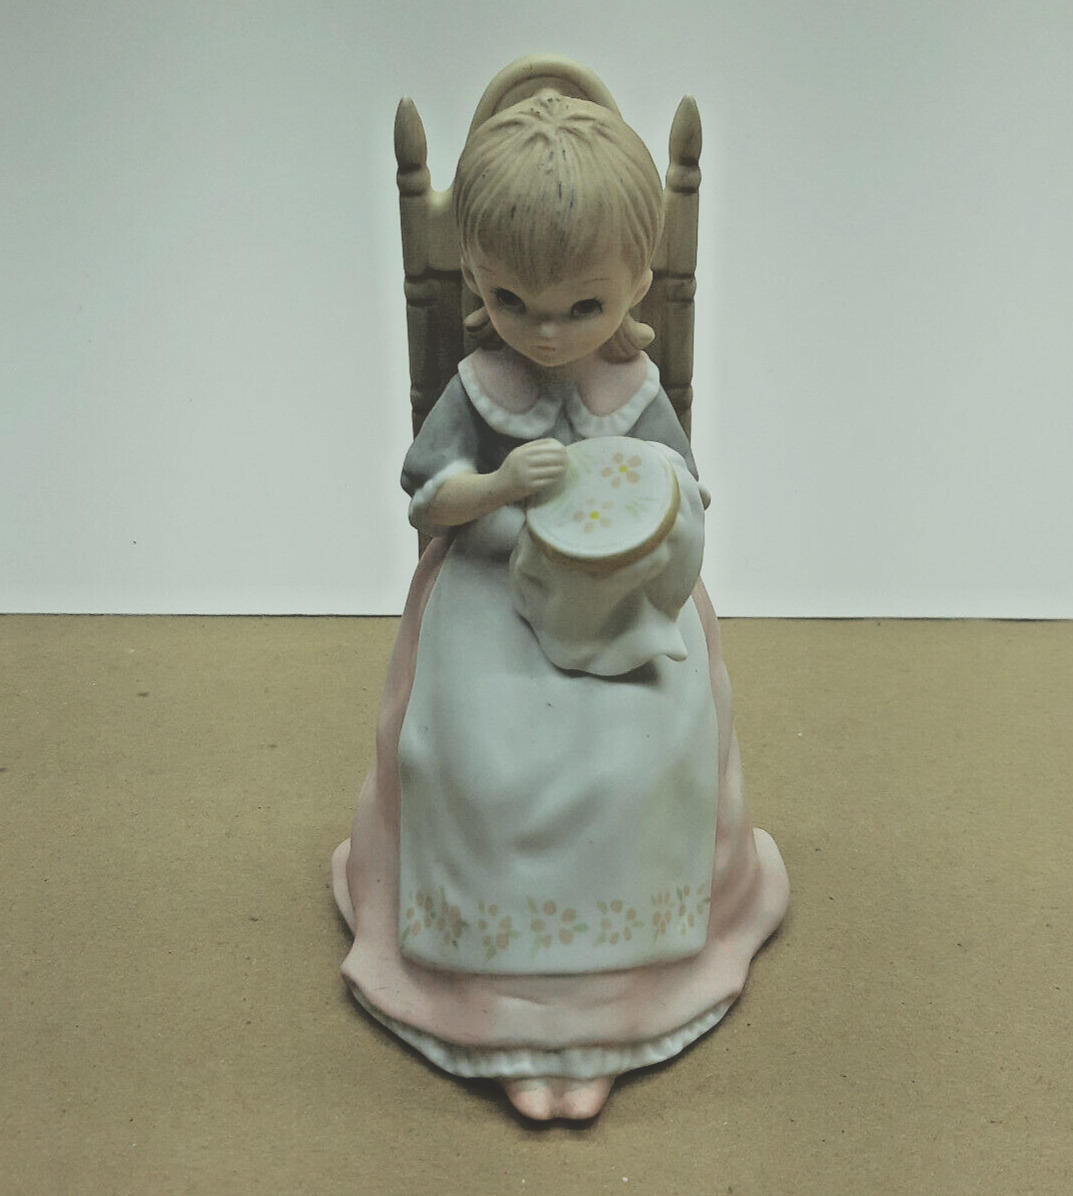 Vintage Lefton “Priscilla” The Christopher Collection Figurine 1982 Excellent